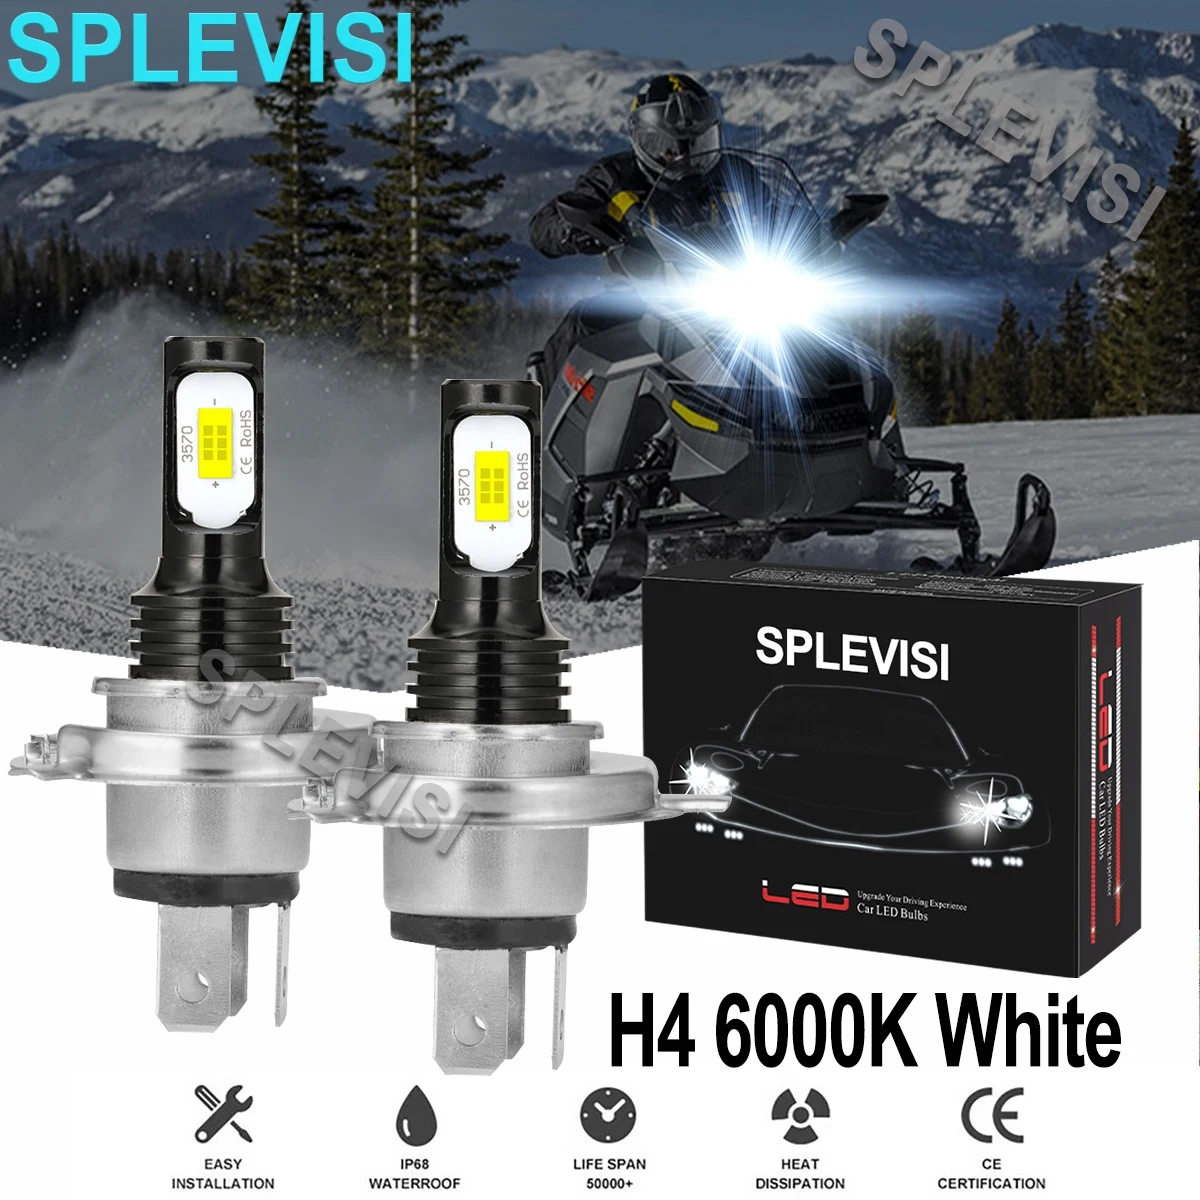 2x 70W  White LED Headlights For Ski-Doo Formula 380F 2000-2001 Formula III 600 1995-1999 Formula III 700 1998-2000 Snowmobile сознательная проза избранные эссе 1952 1995